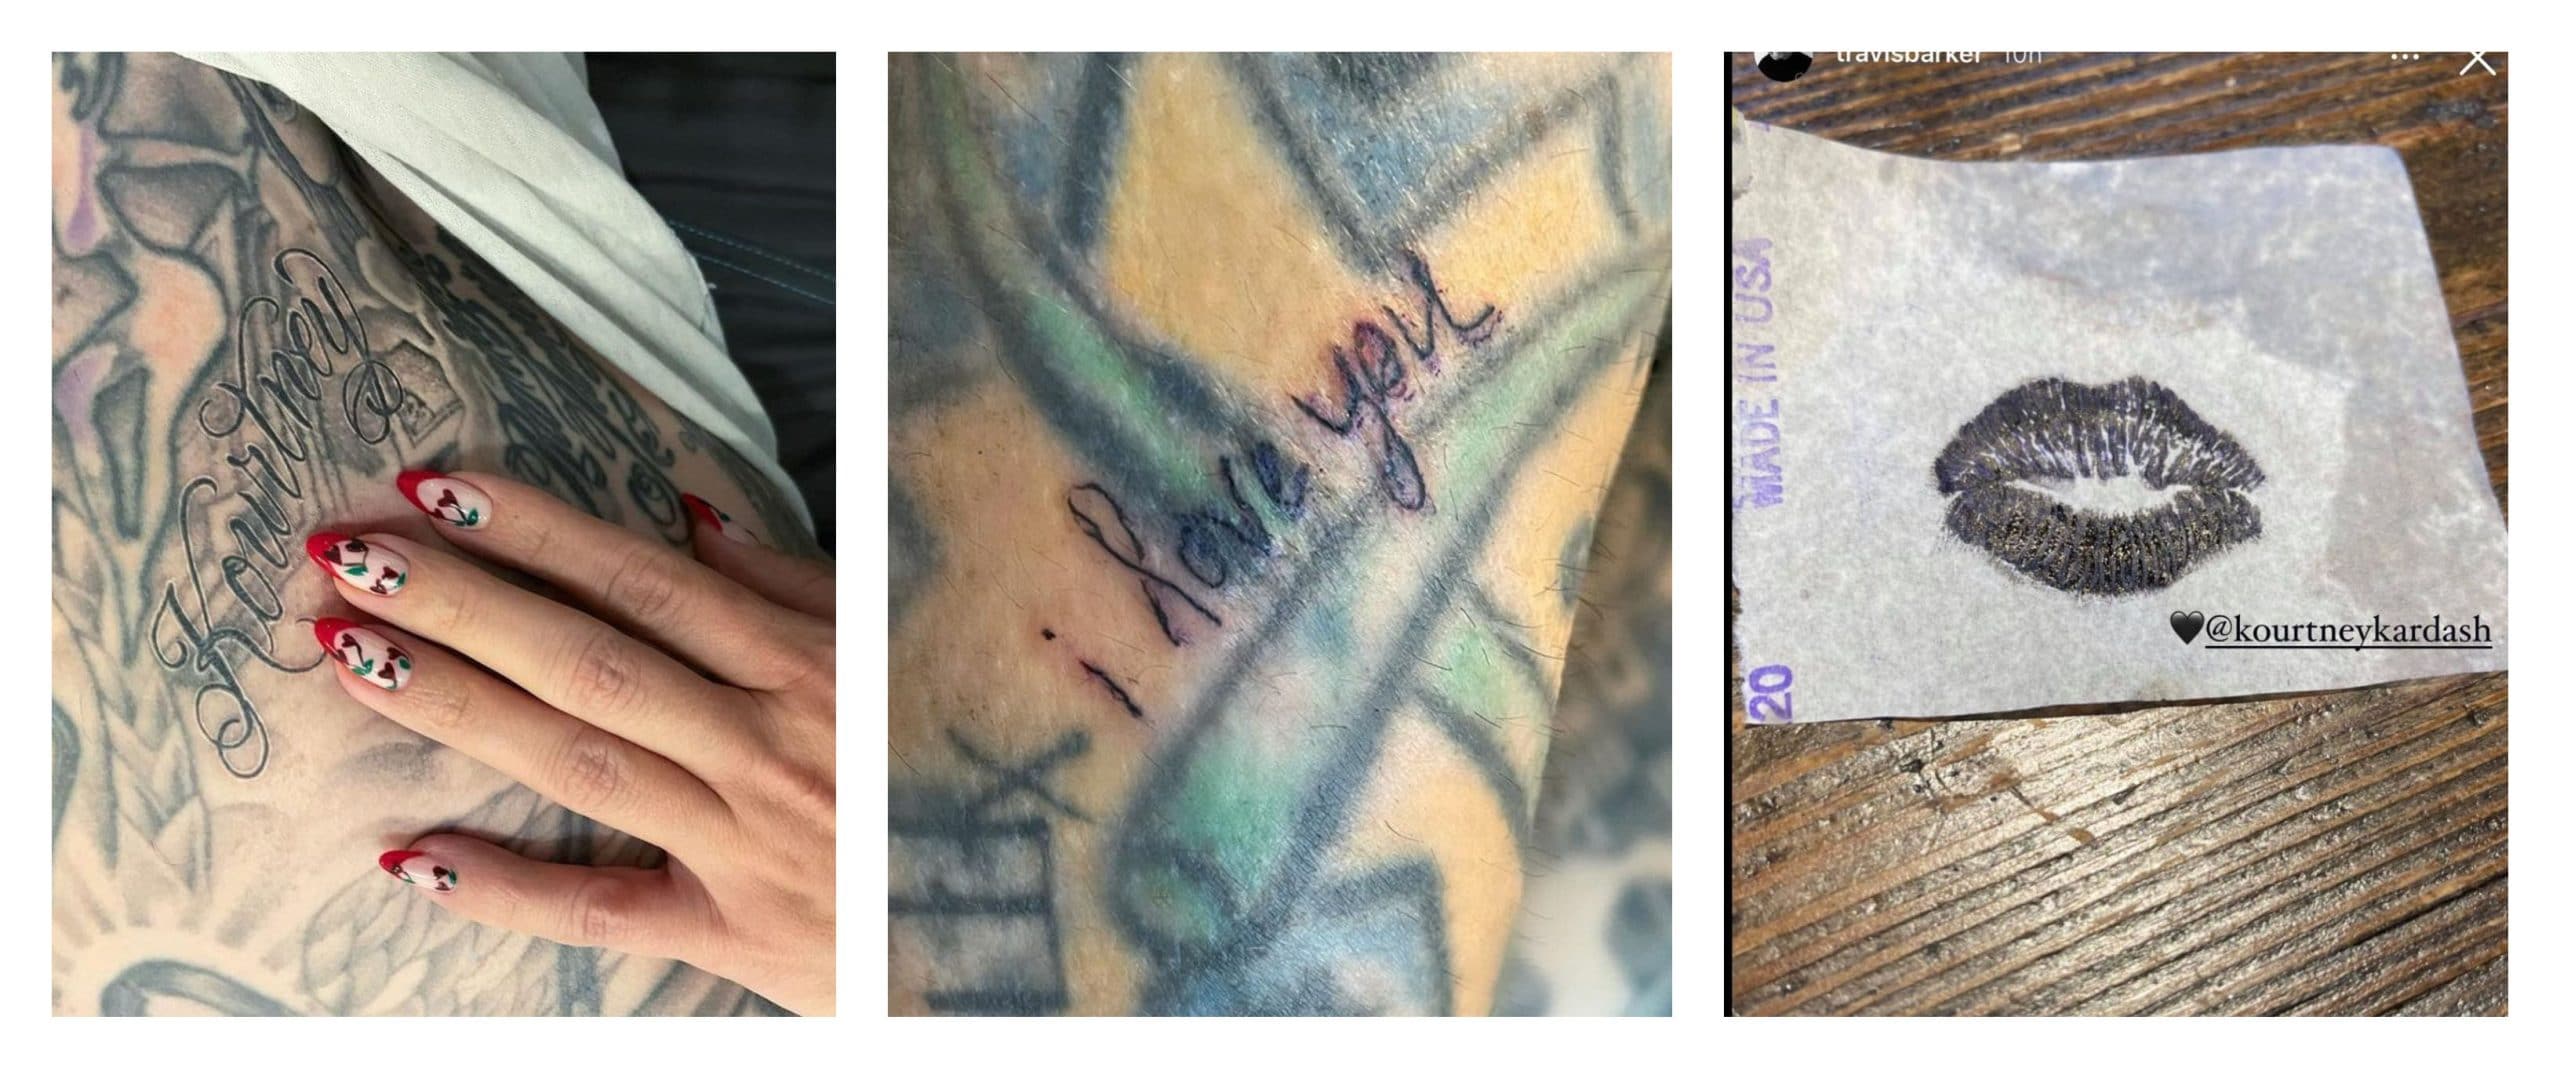 Travis Barker Kourtney Kardashian Tattoos